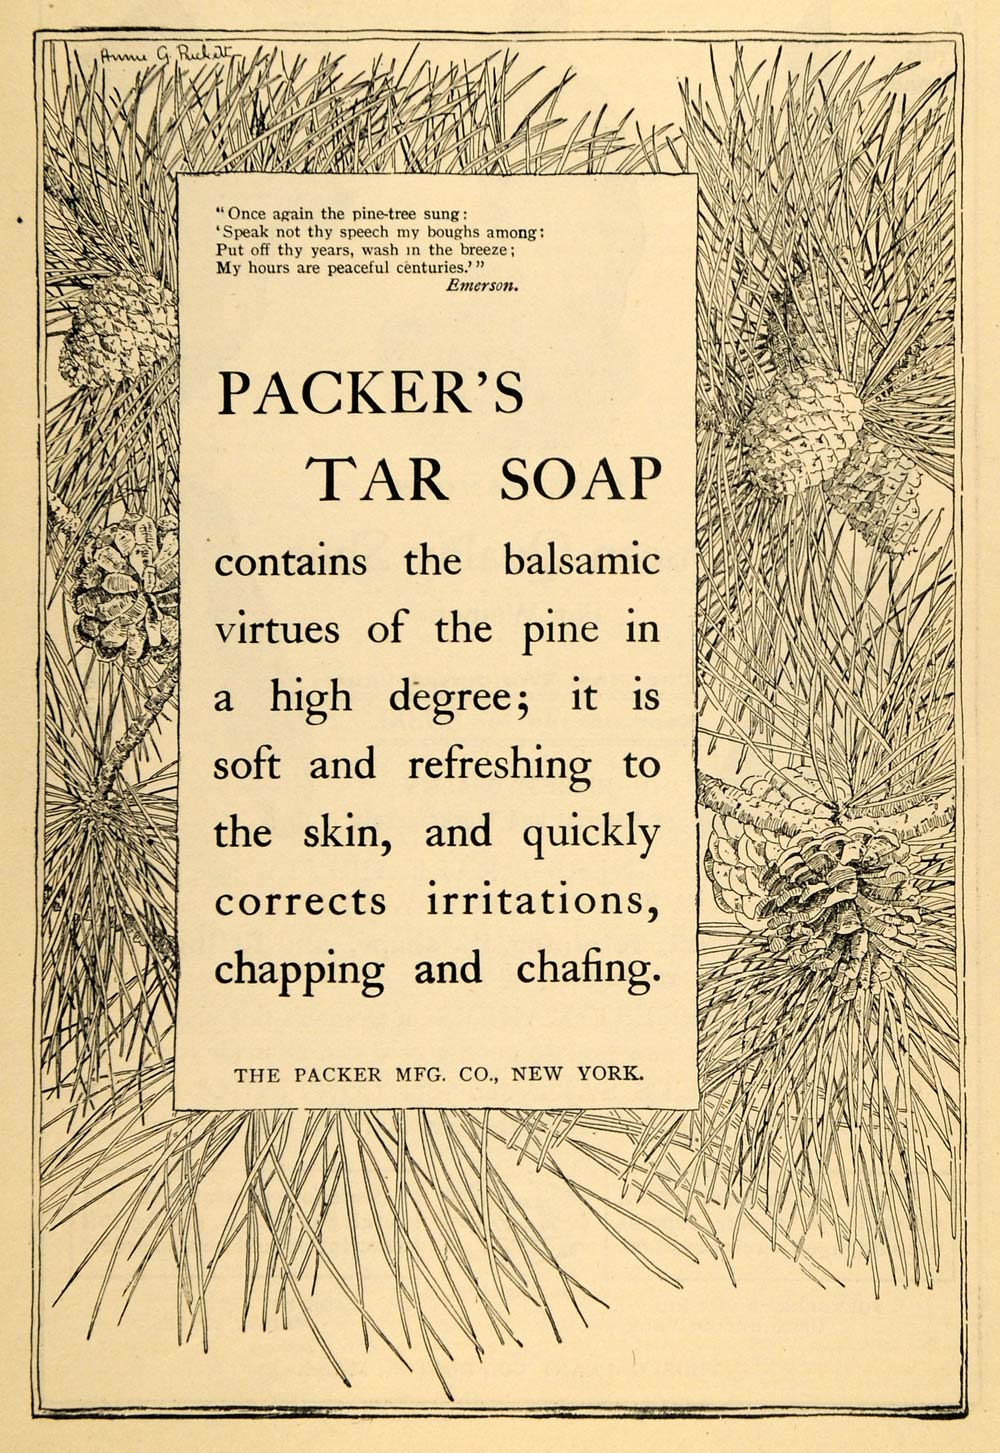 1898 Ad Pine Tree Cones Packer Manufacturing Tar Soap - ORIGINAL TOM3